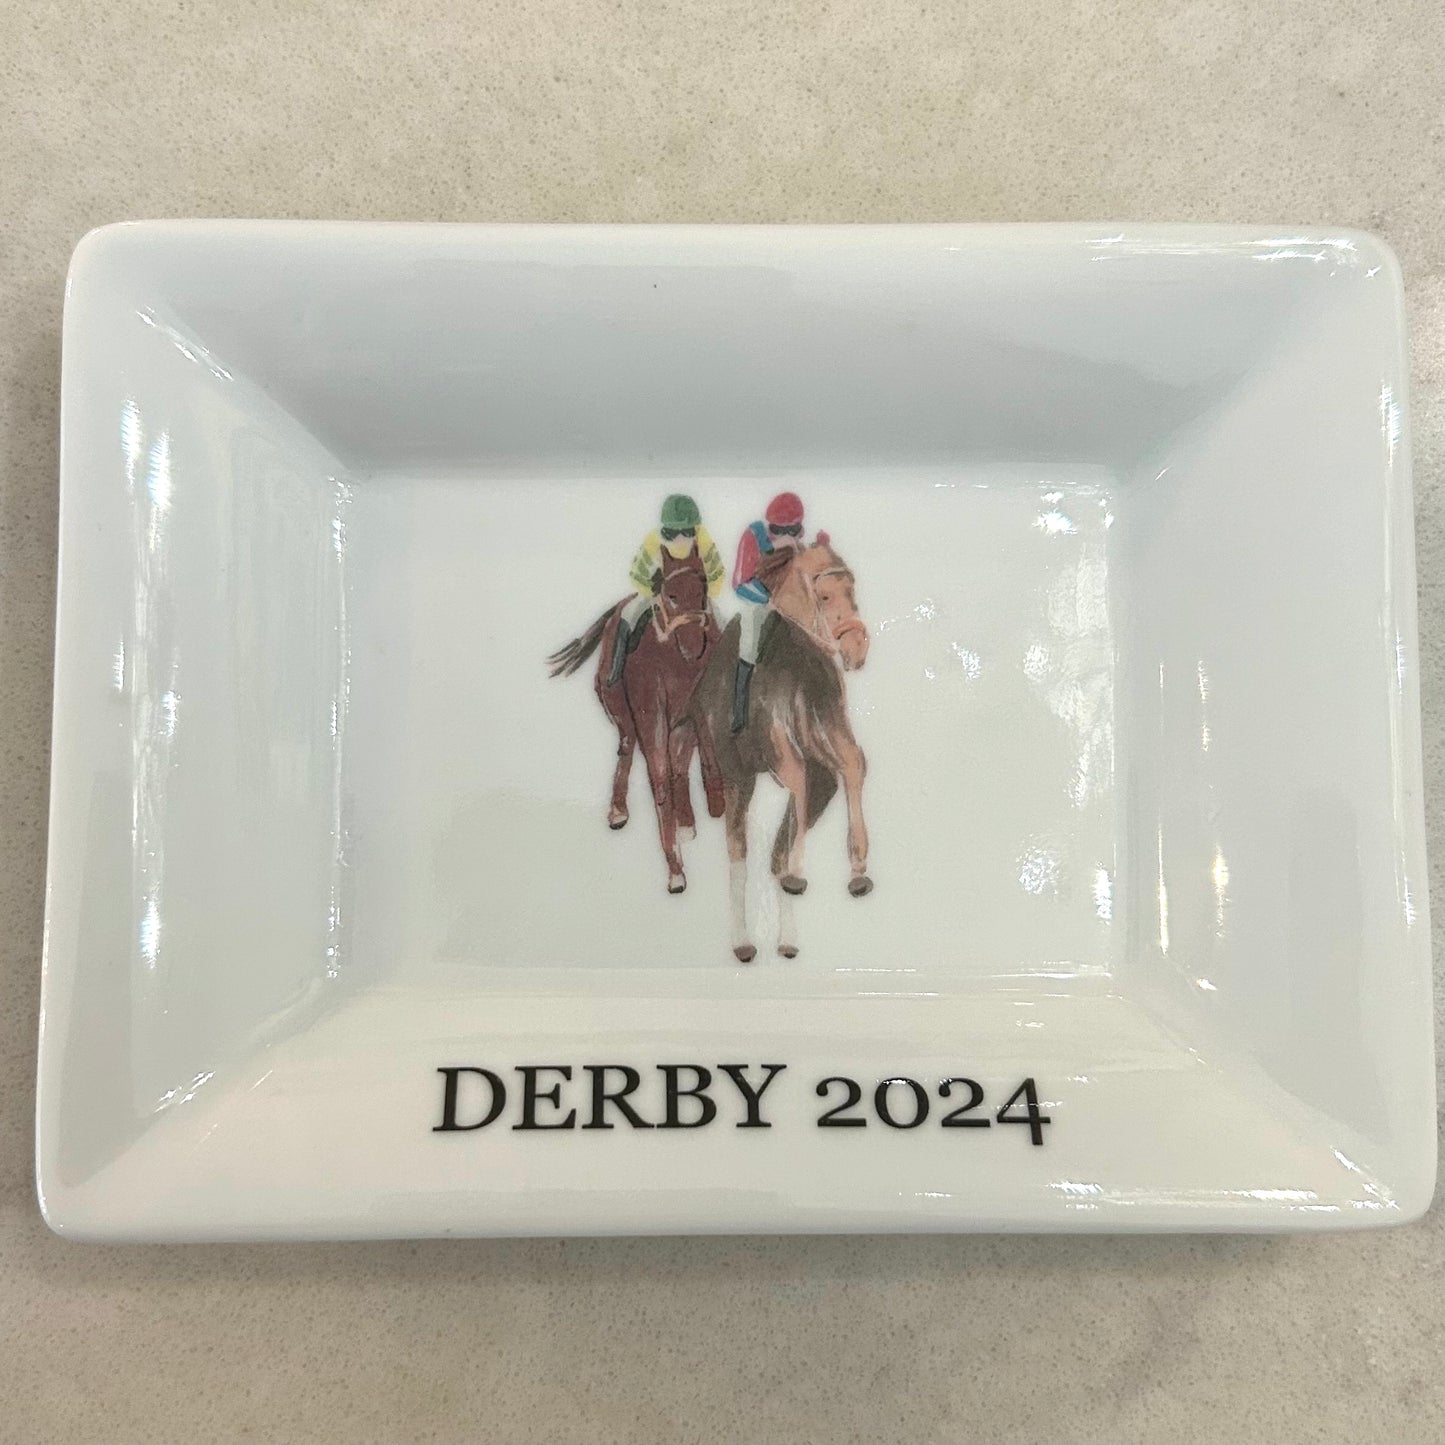 Derby Horses "DERBY 2024" Mini Dish